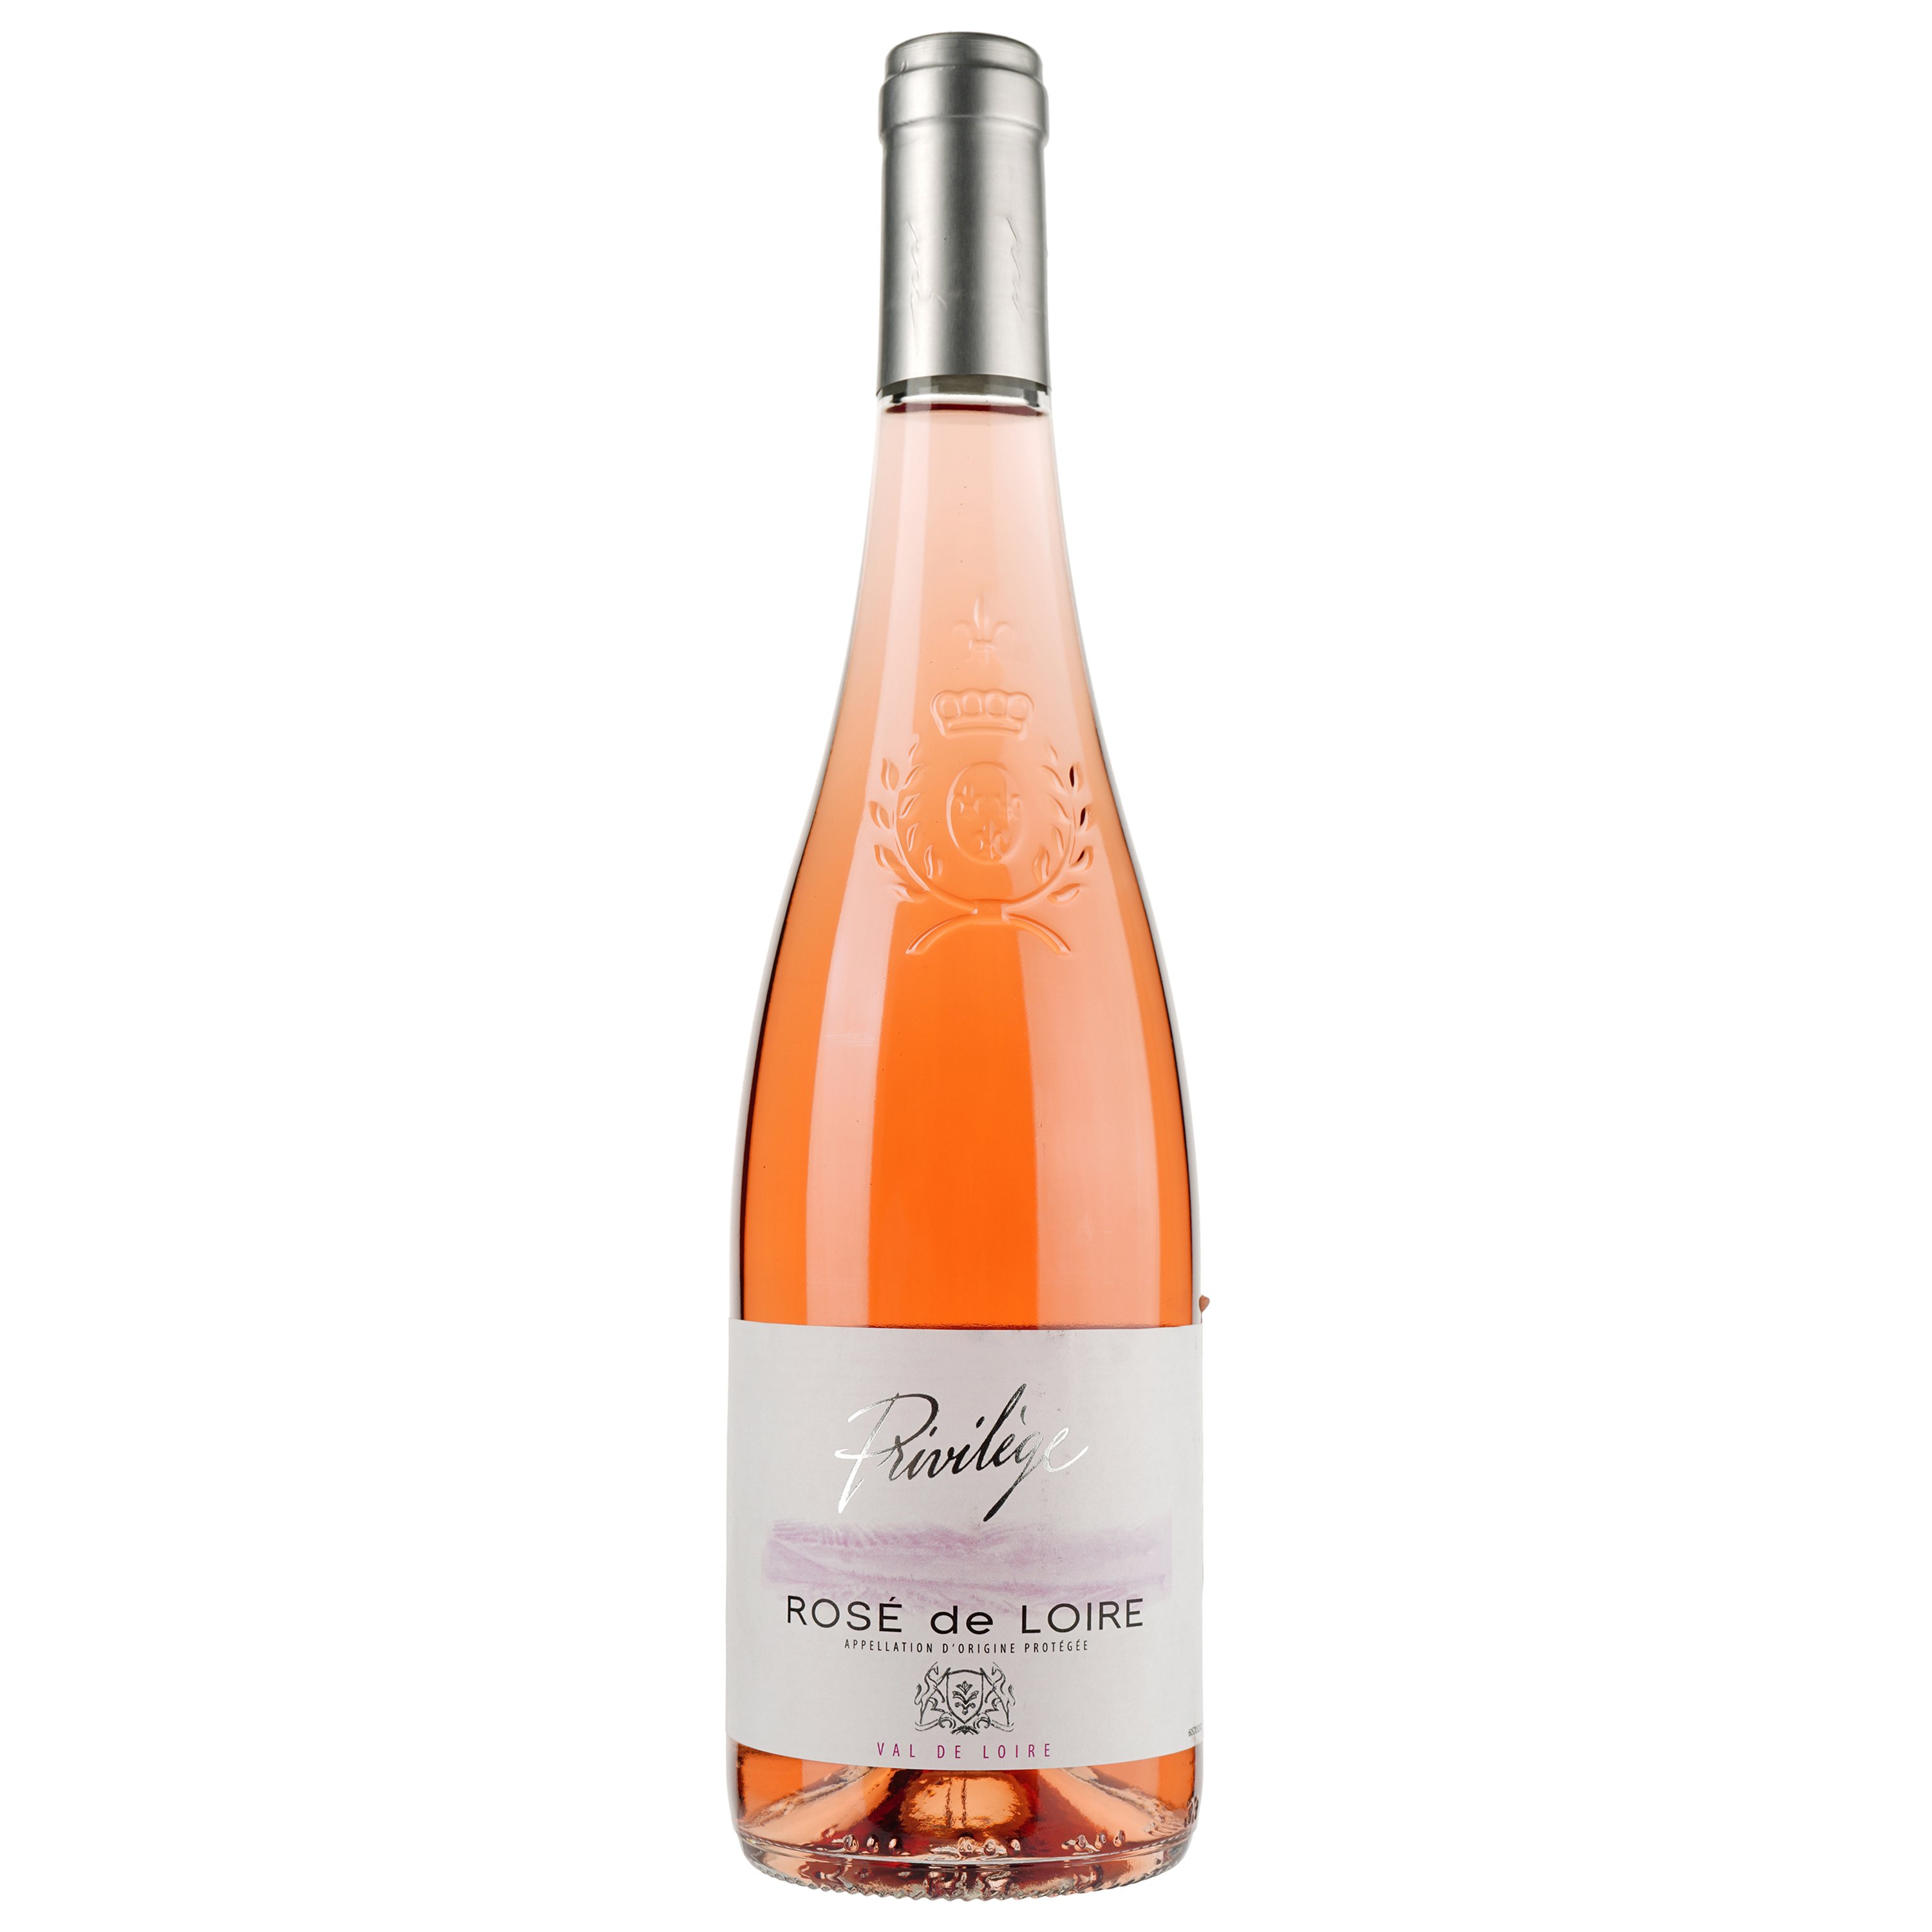 Вино Drouet Freres Rose de Loire, розовое, сухое, 0,75 л - фото 1